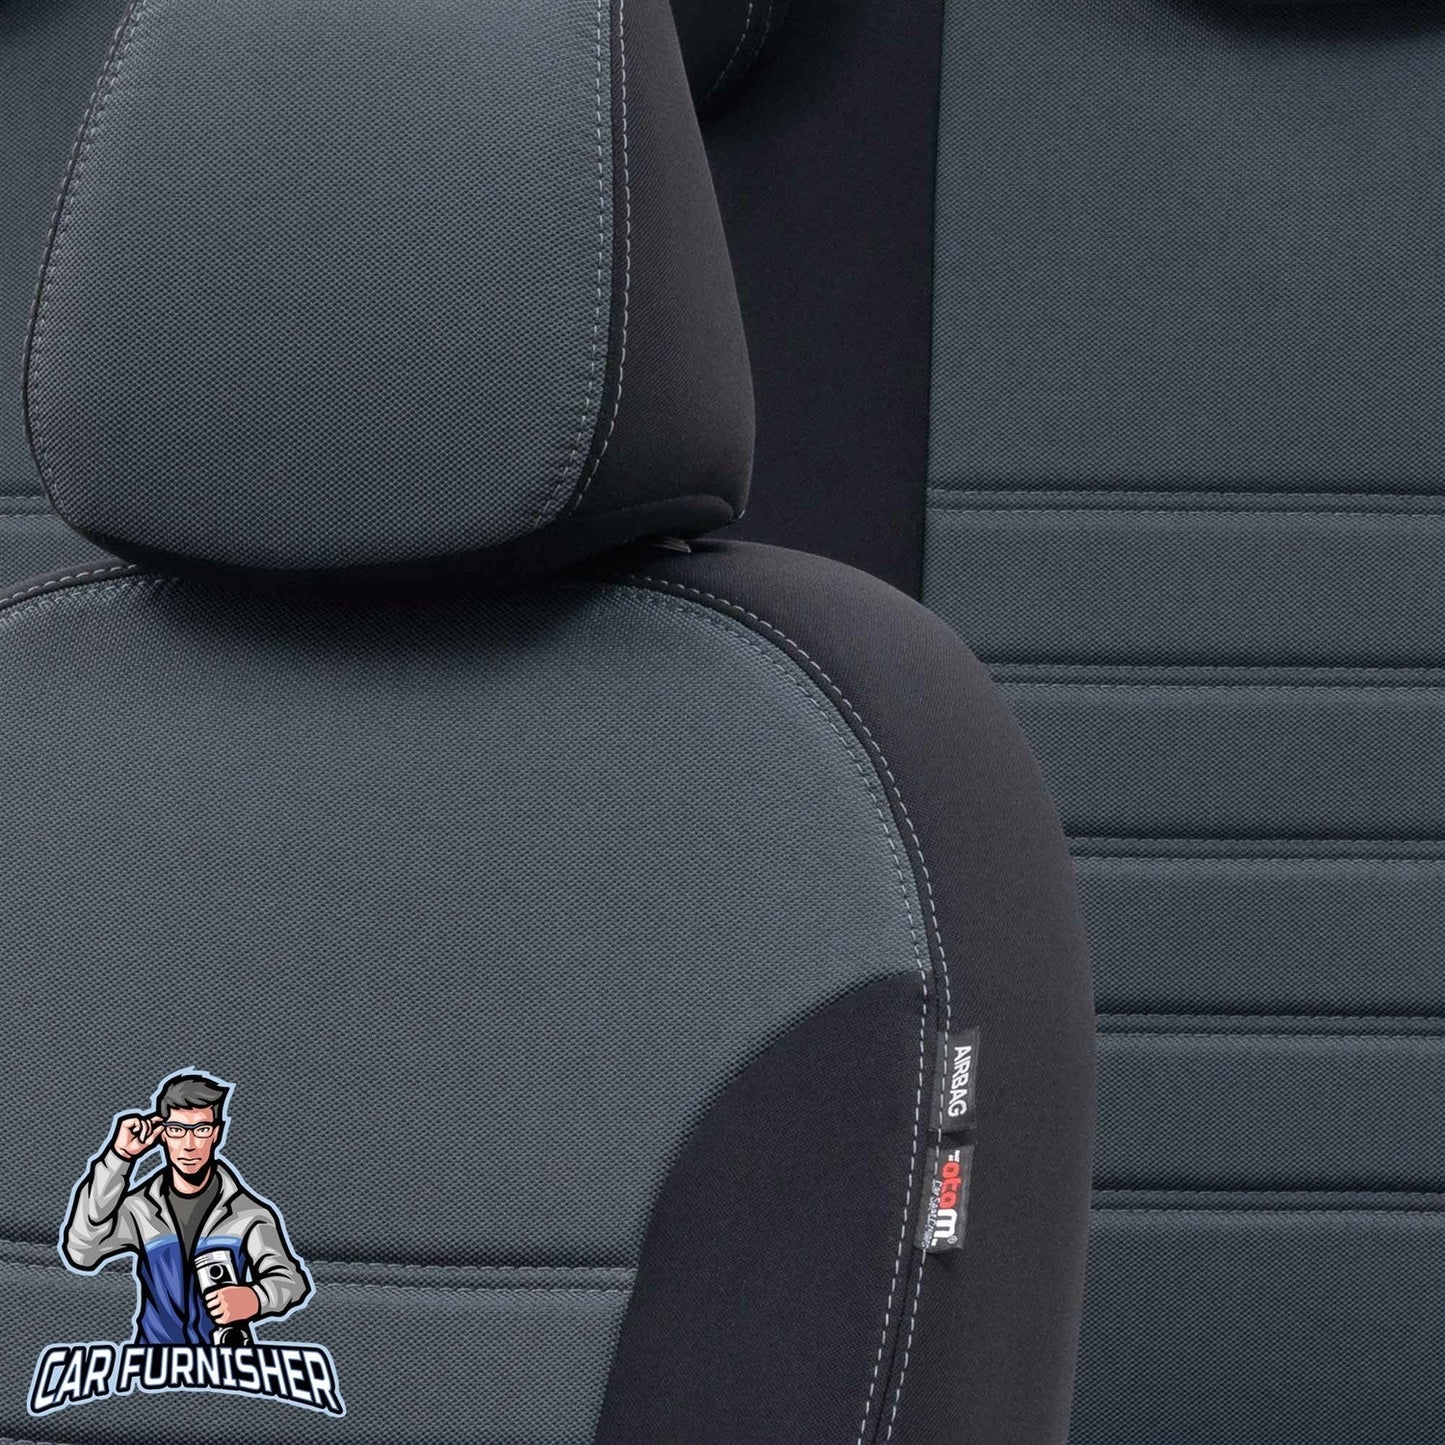 Fiat Scudo Seat Covers Original Jacquard Design Smoked Black Jacquard Fabric